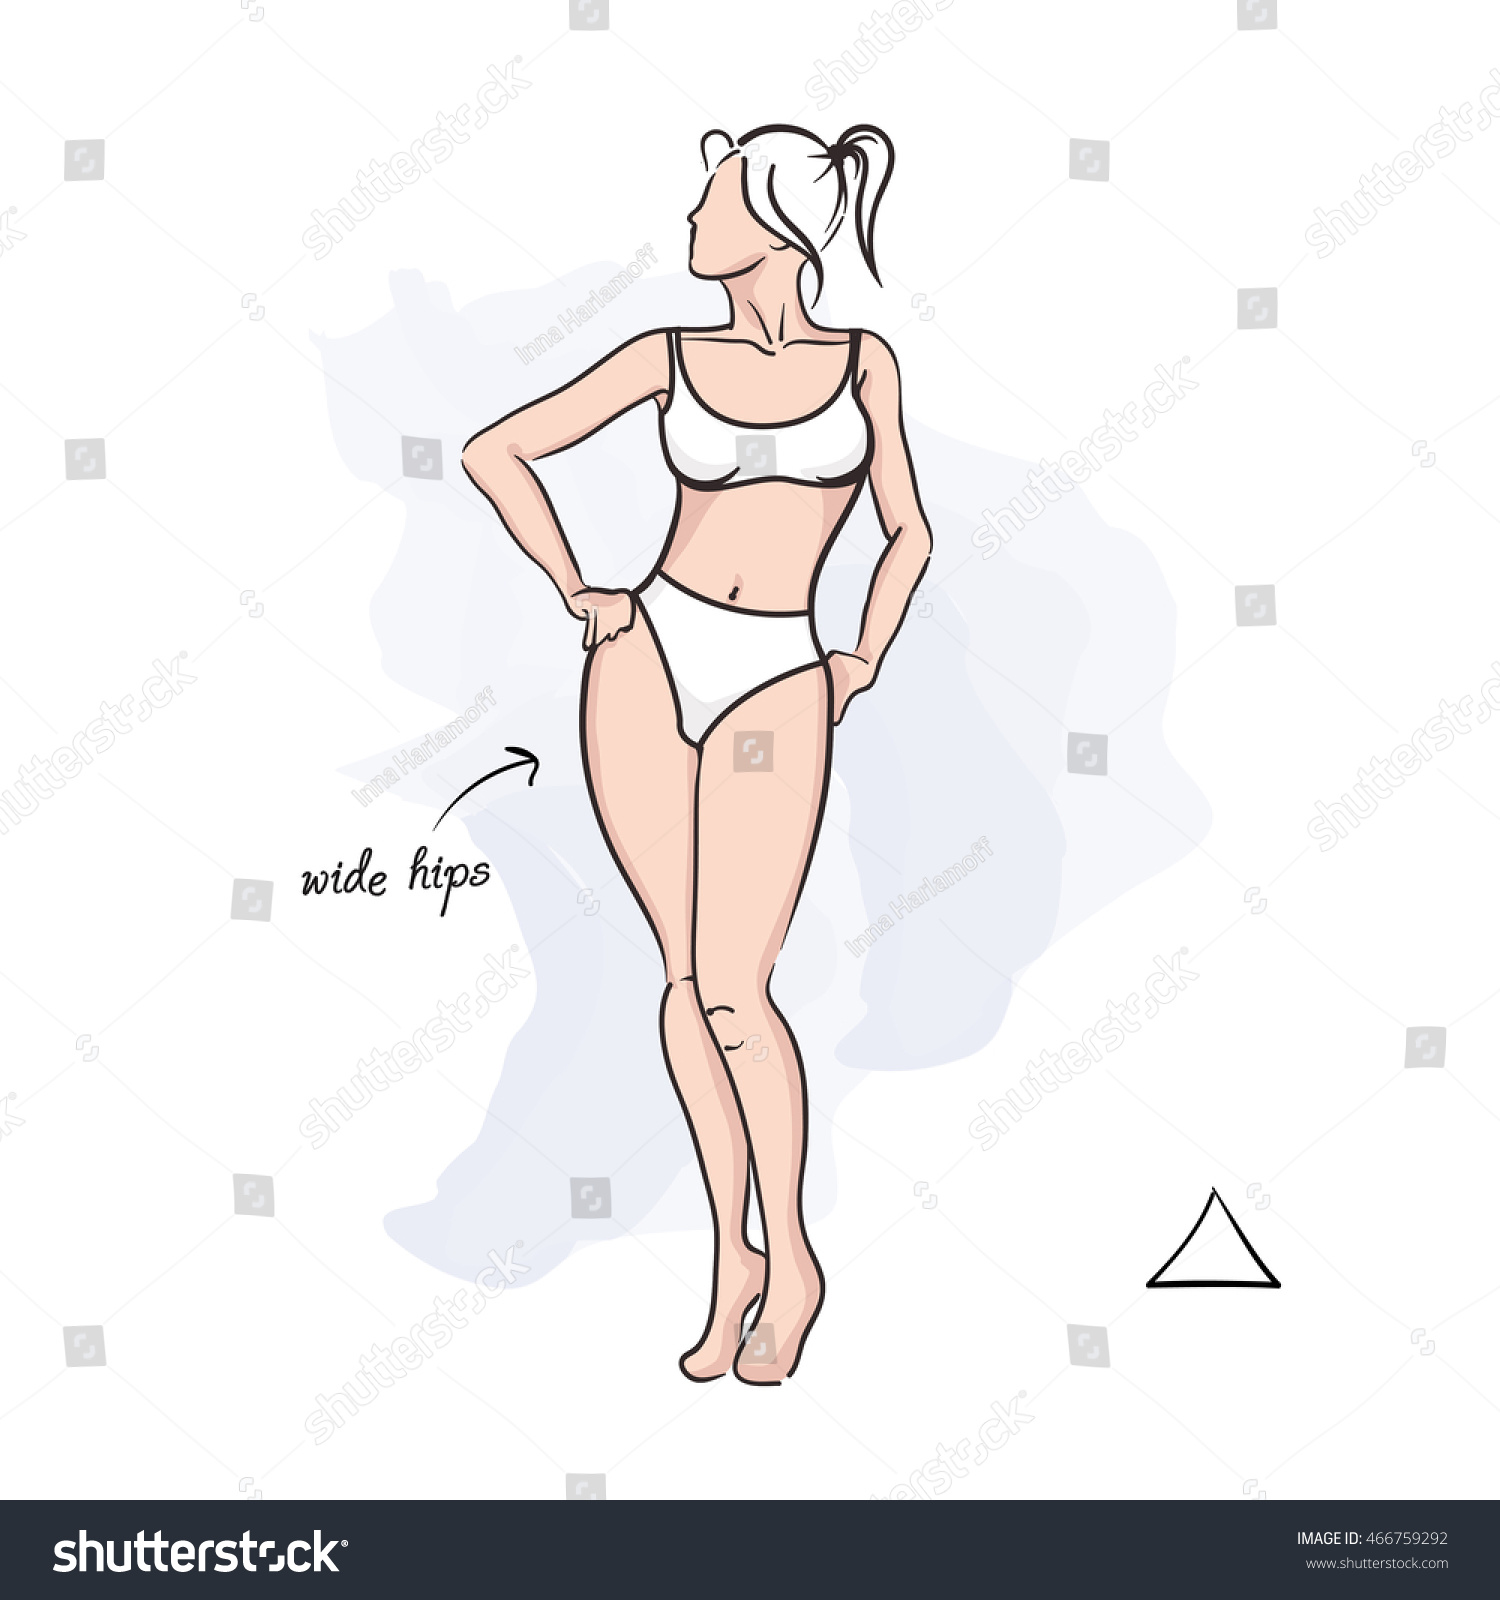 Woman Triangle Body Shape Vector Illustration Royalty Free Stock Vector 466759292 Avopix Com